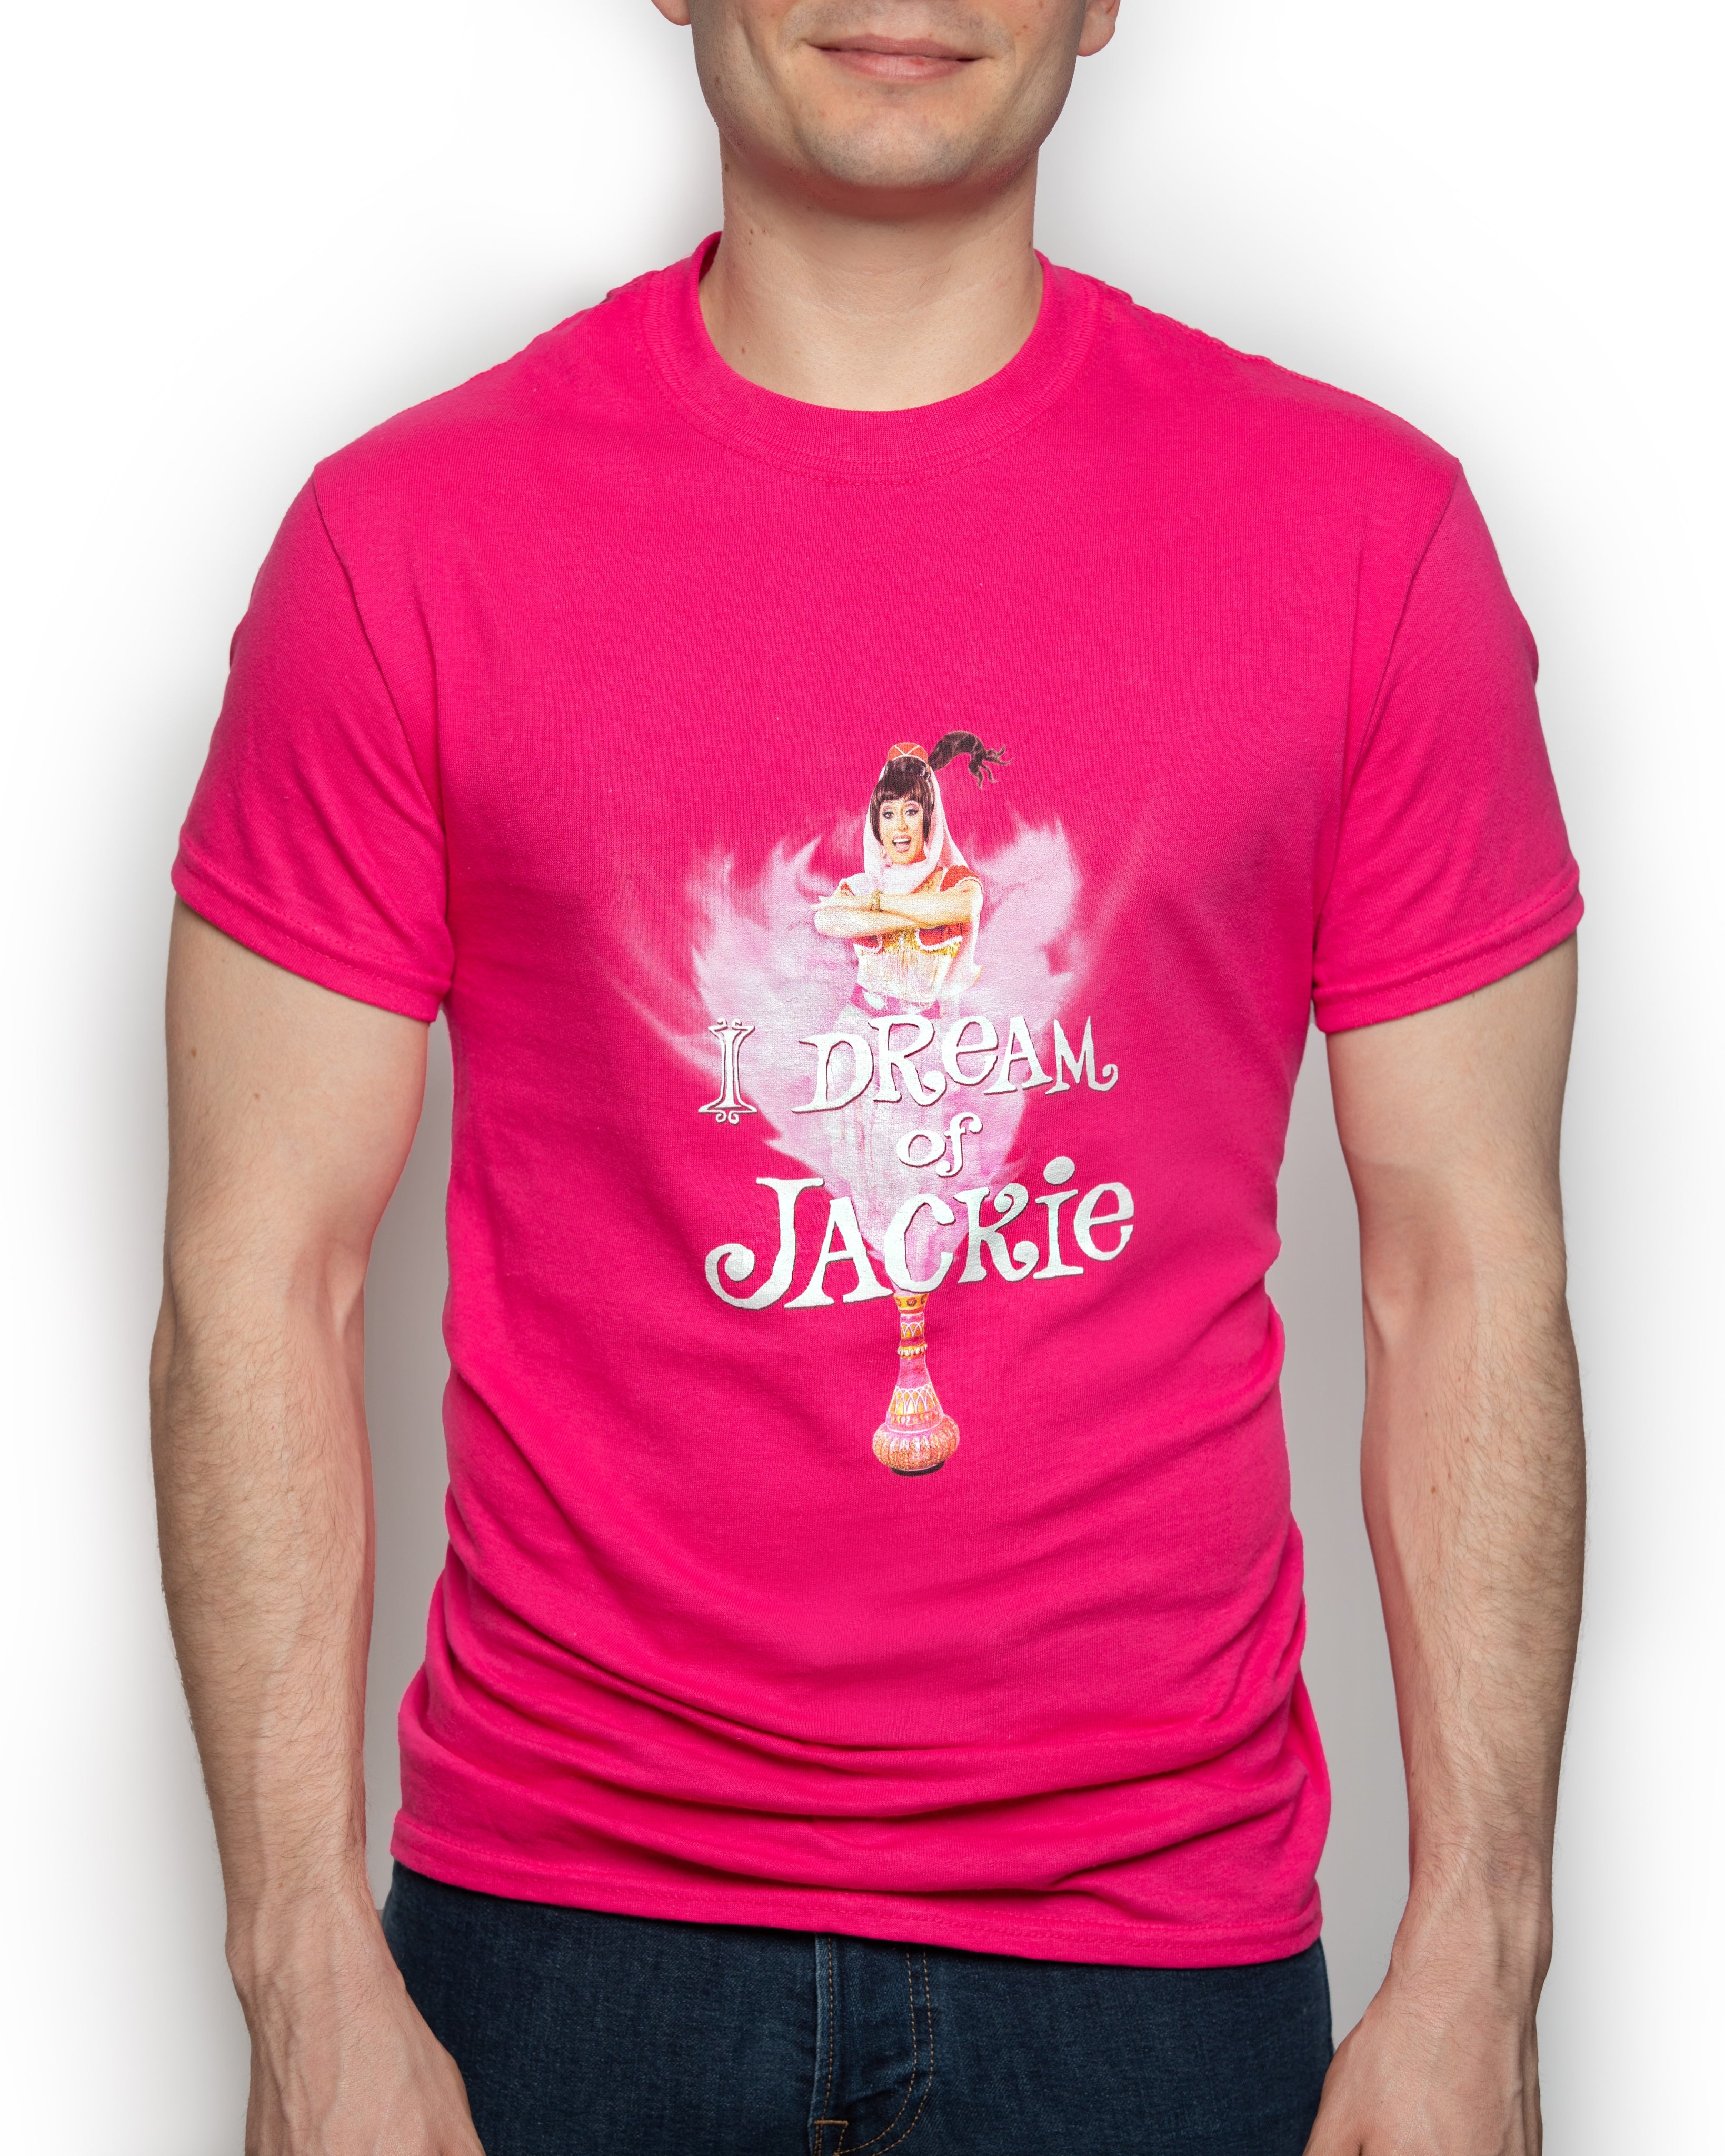 tee shirts online india